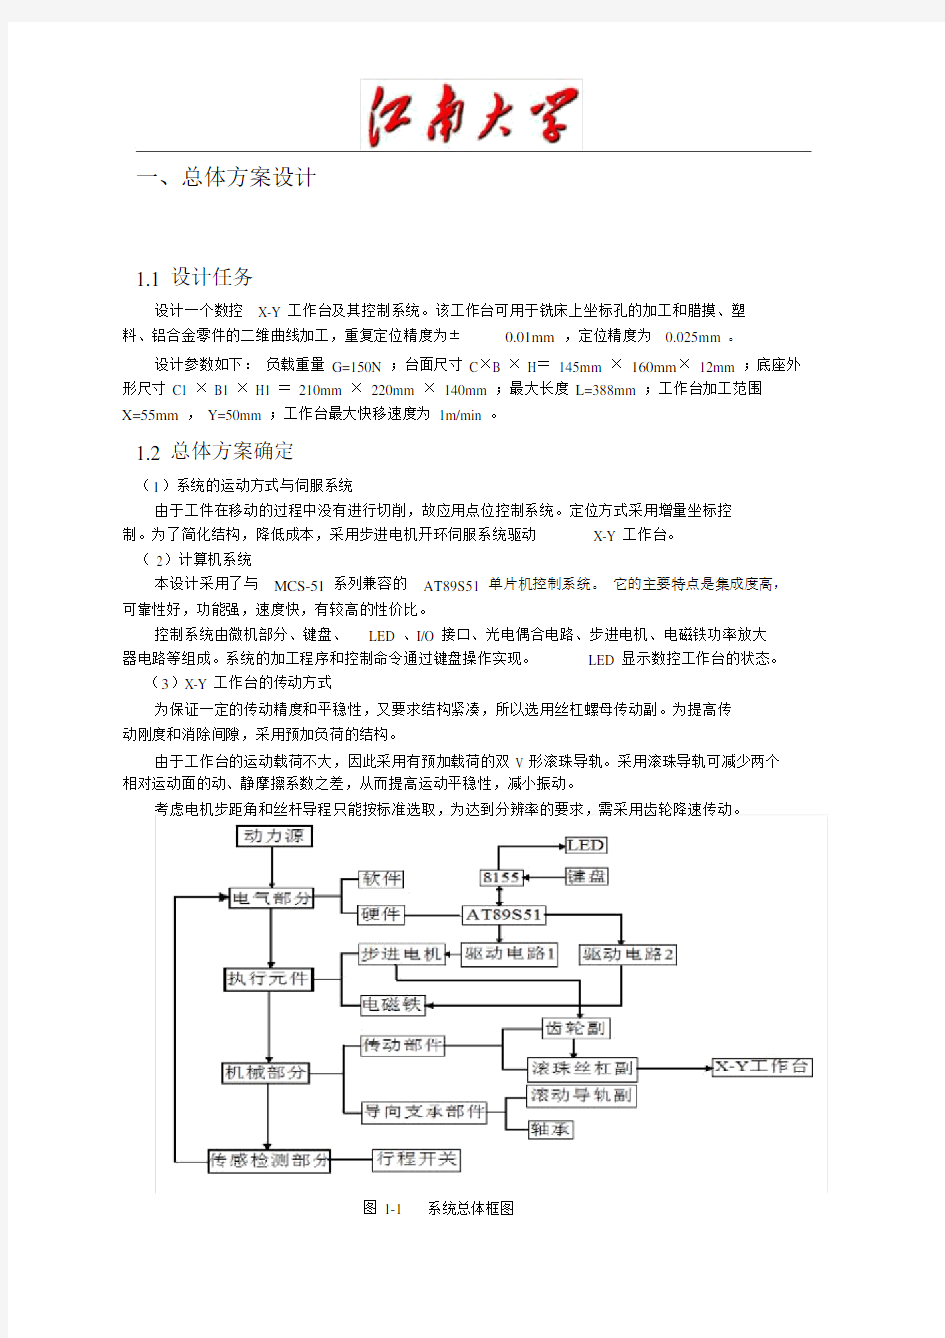 X-Y数控工作台毕业论文(机电一体化系统综合课程设计).docx